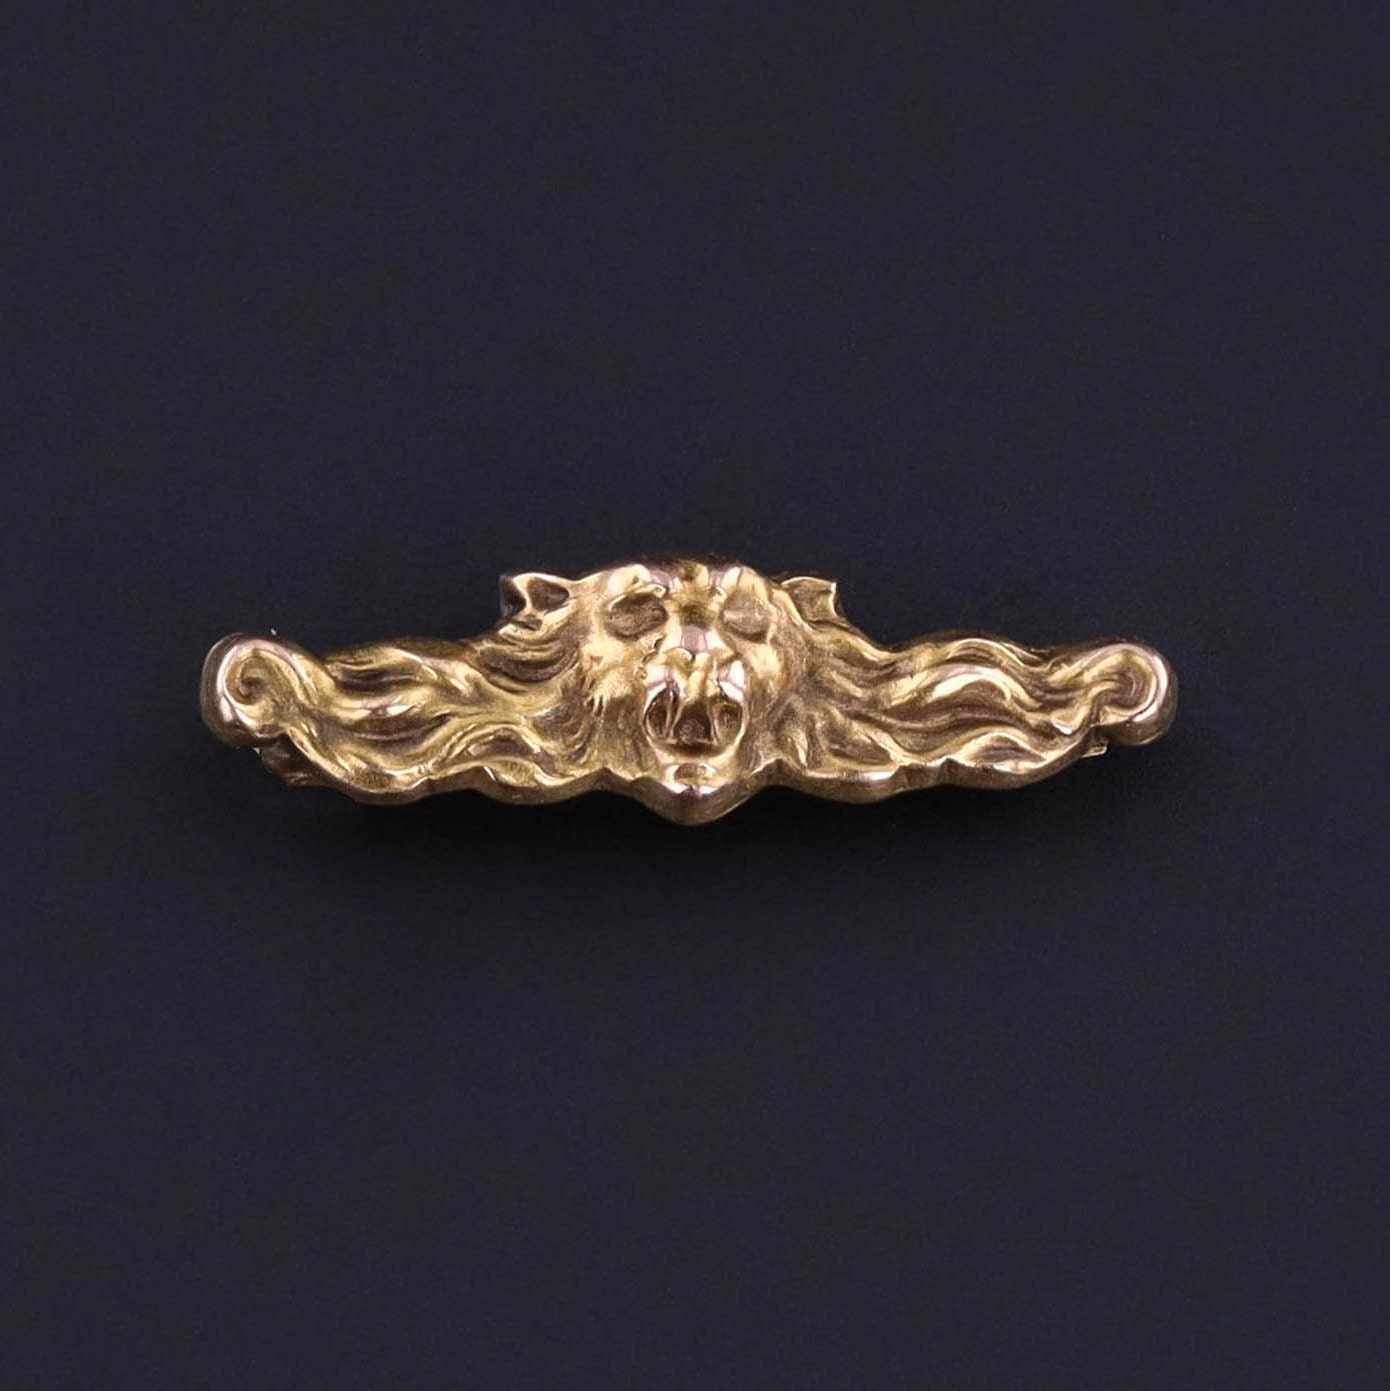 Antique Lion Lace Pin of 10k Gold